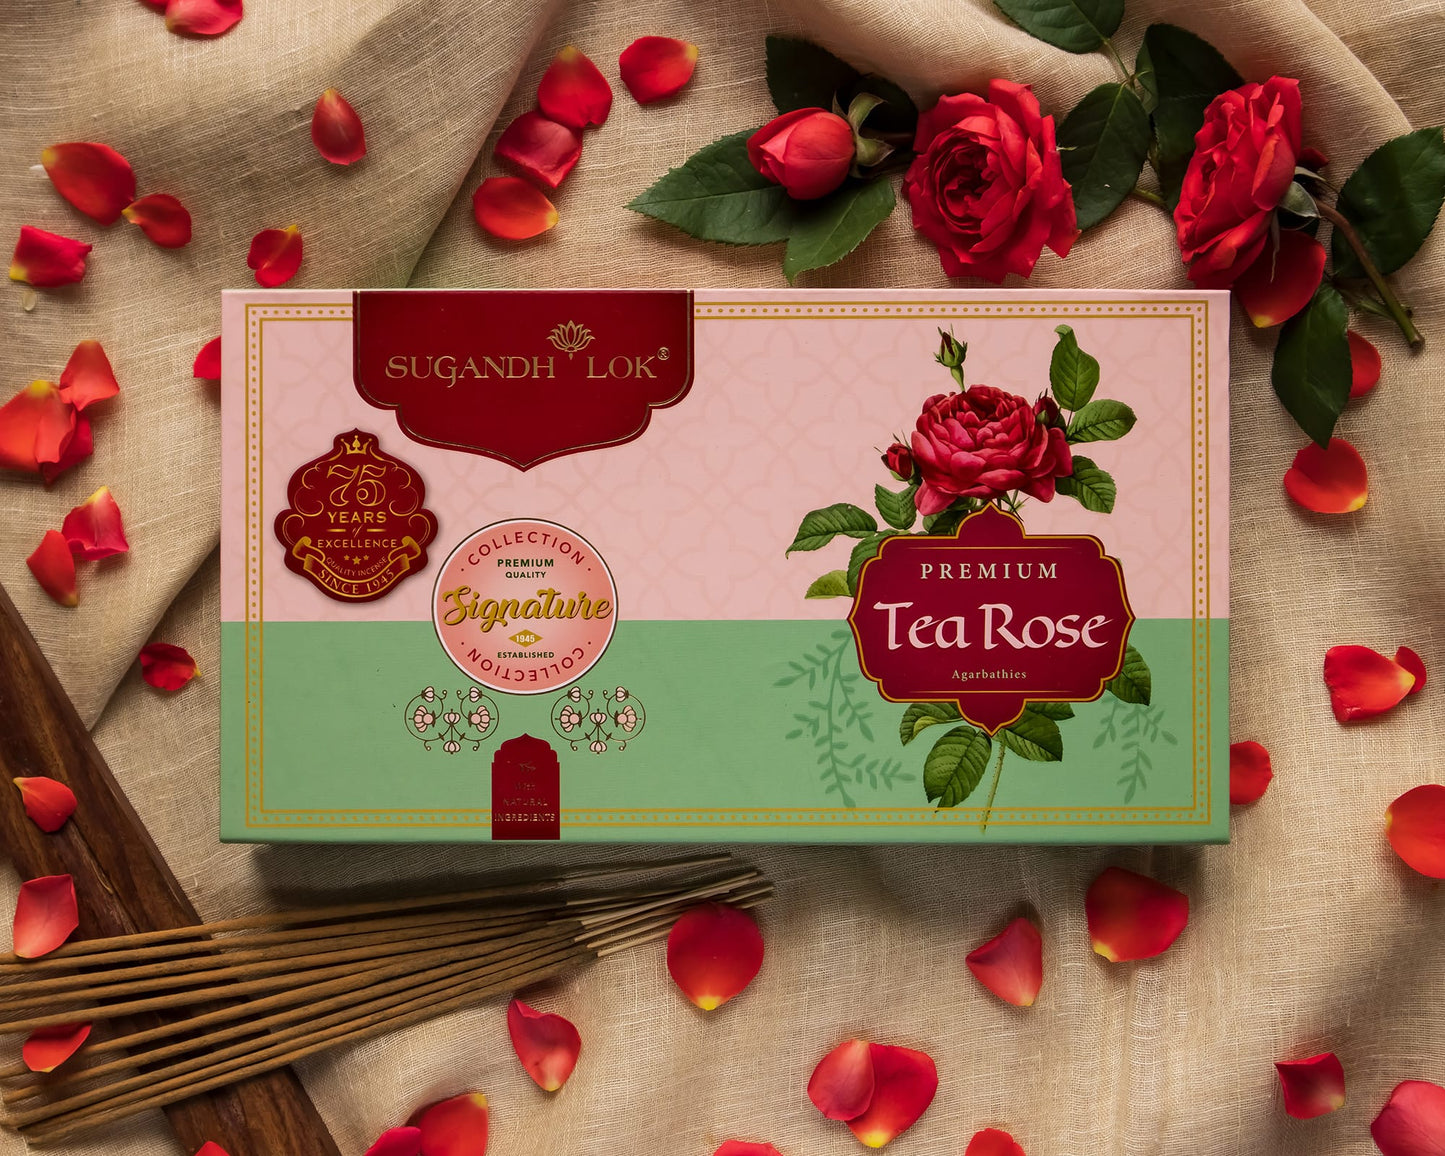 Premium Tea Rose Agarbatti Box surrounded by rose flowers, petals & incense sticks